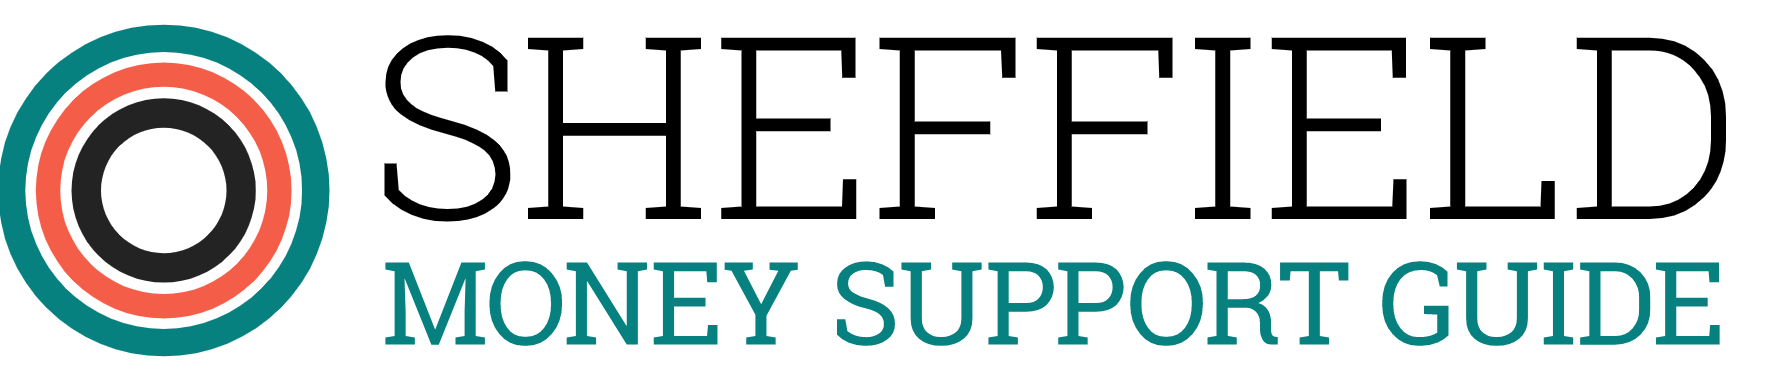 Sheffield money support guide logo